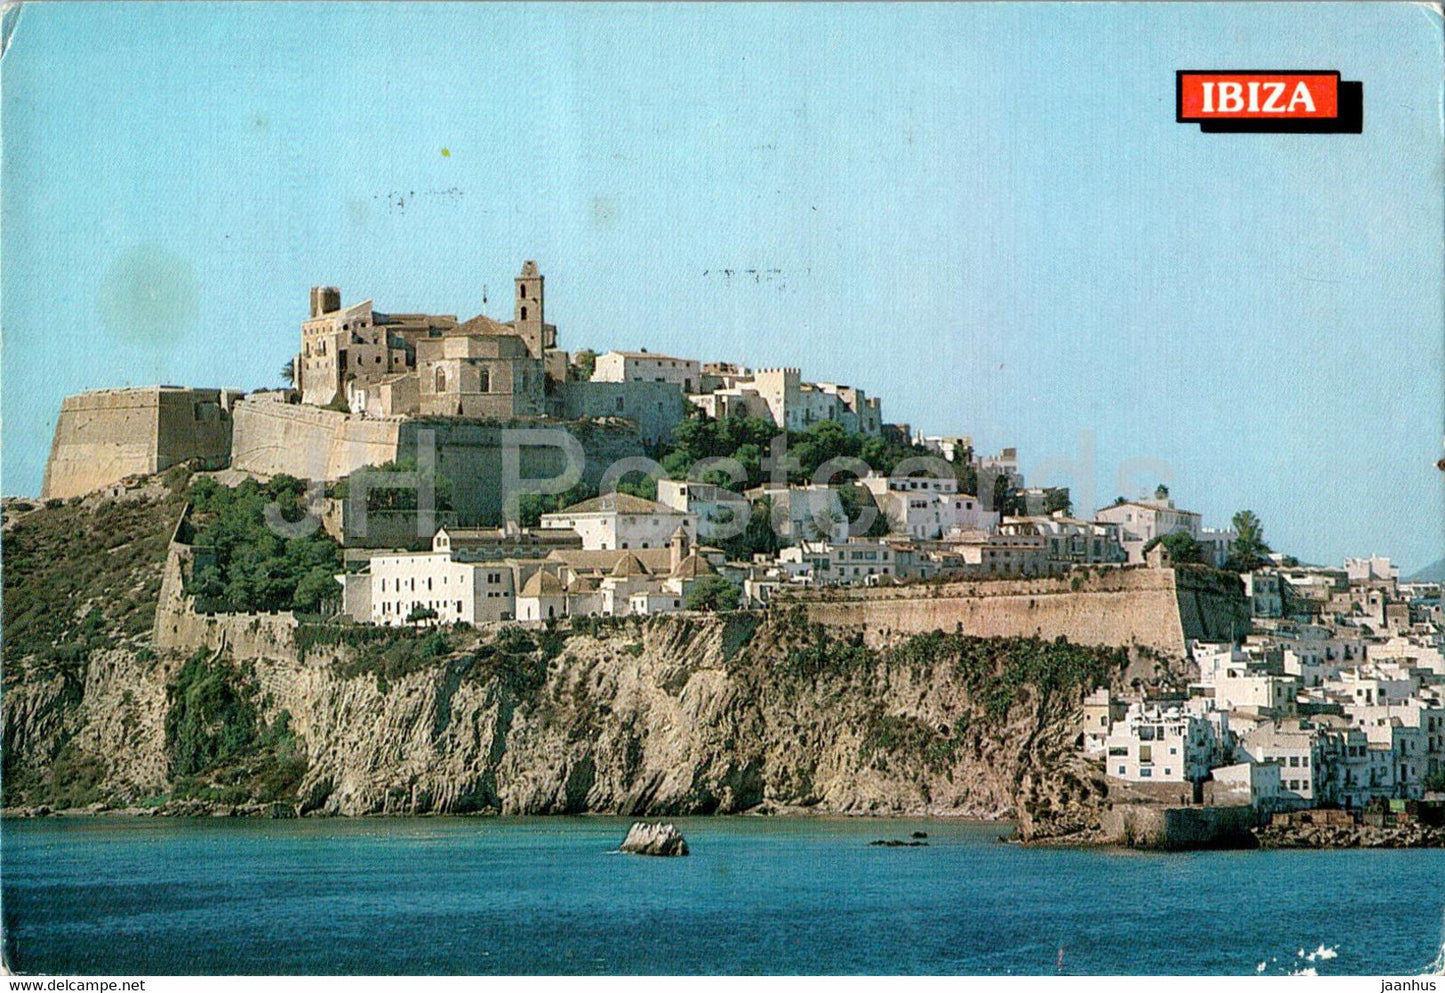 Dalt Vila - Ibiza - Baleares - Verdera - Spain - used - JH Postcards